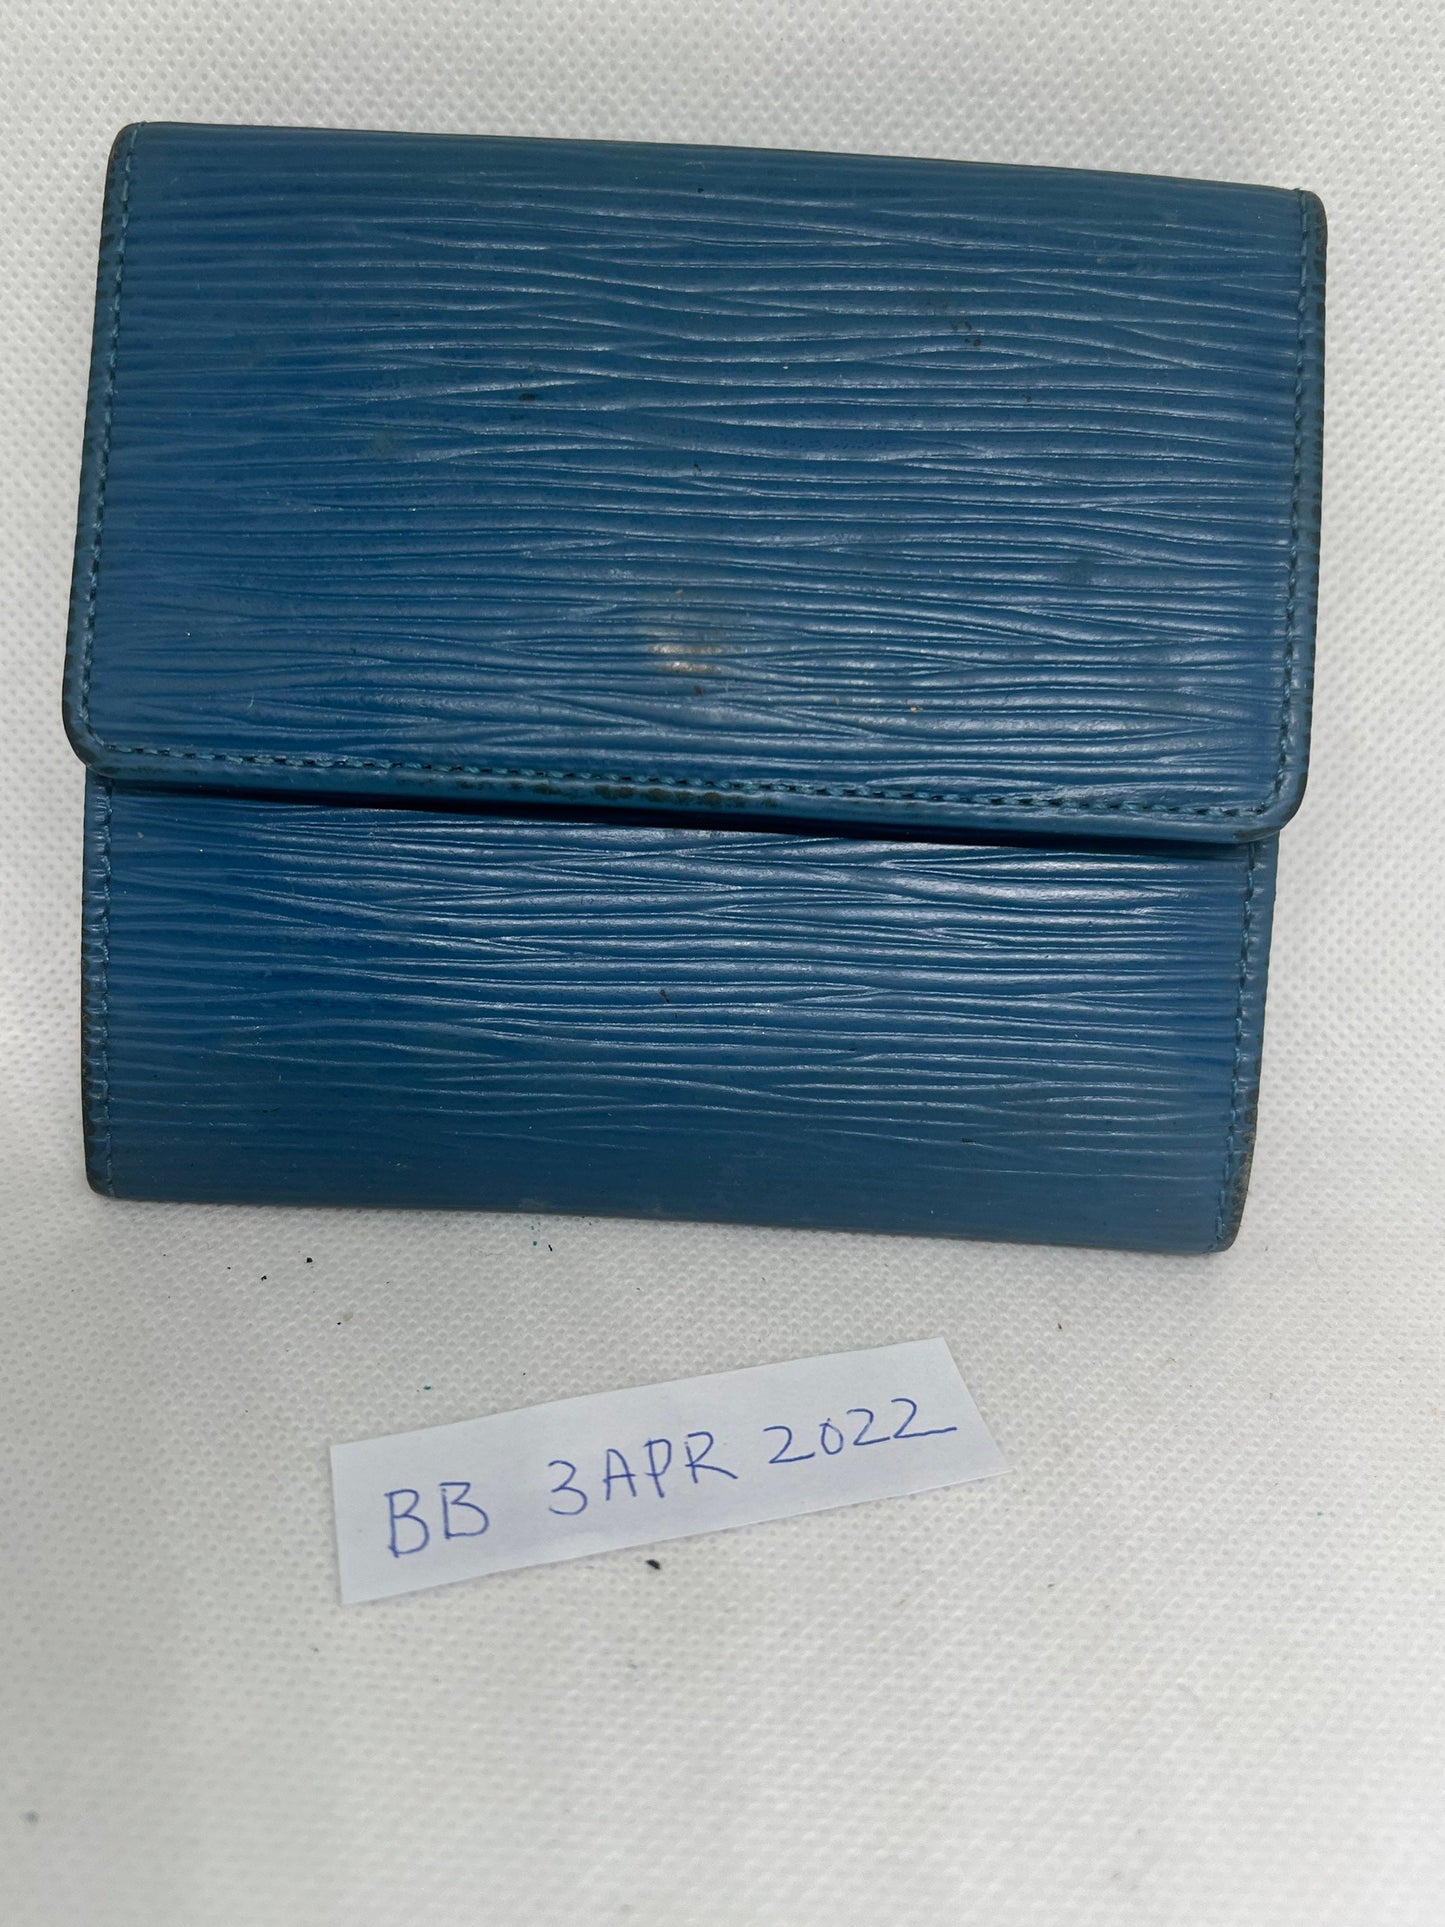 Louis Vuitton 法國製造藍色錢包 11"x10"